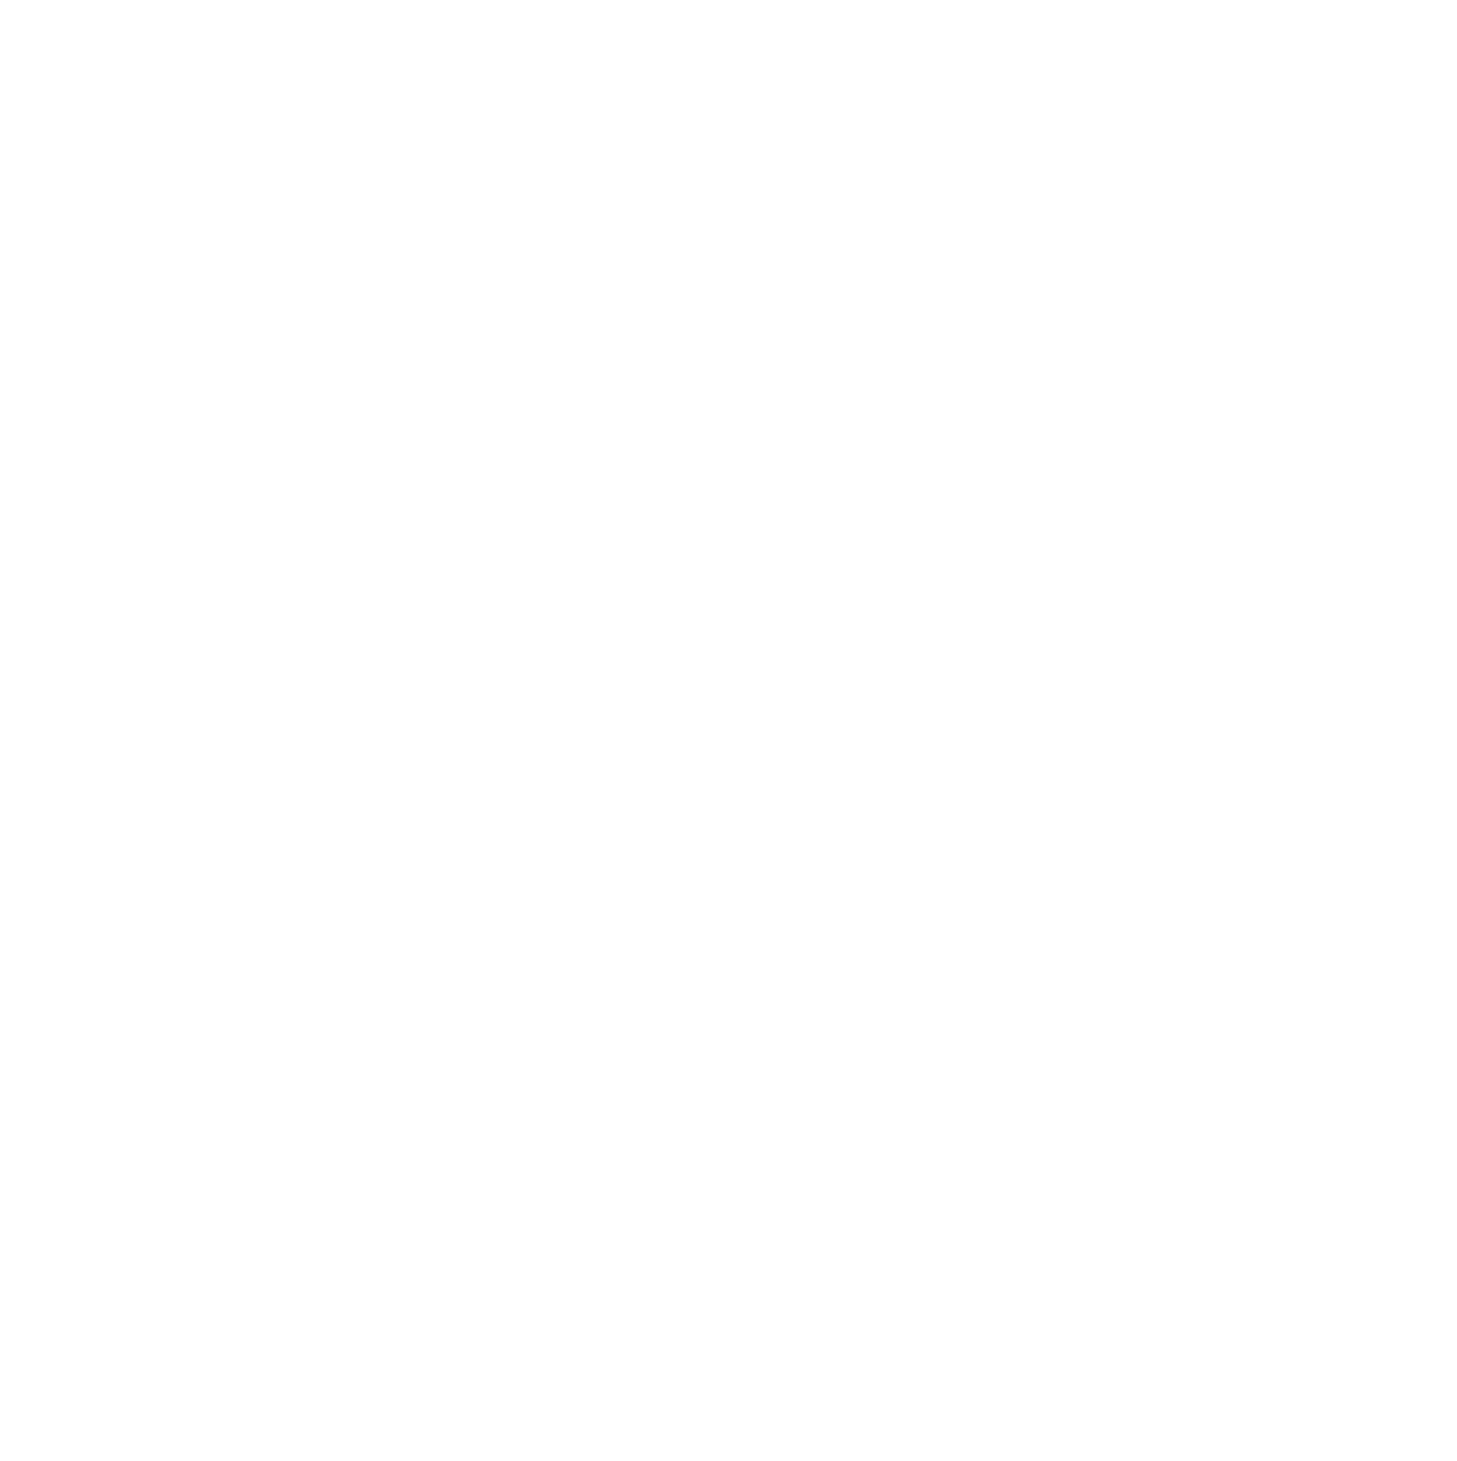 Lewis Floyd Henry